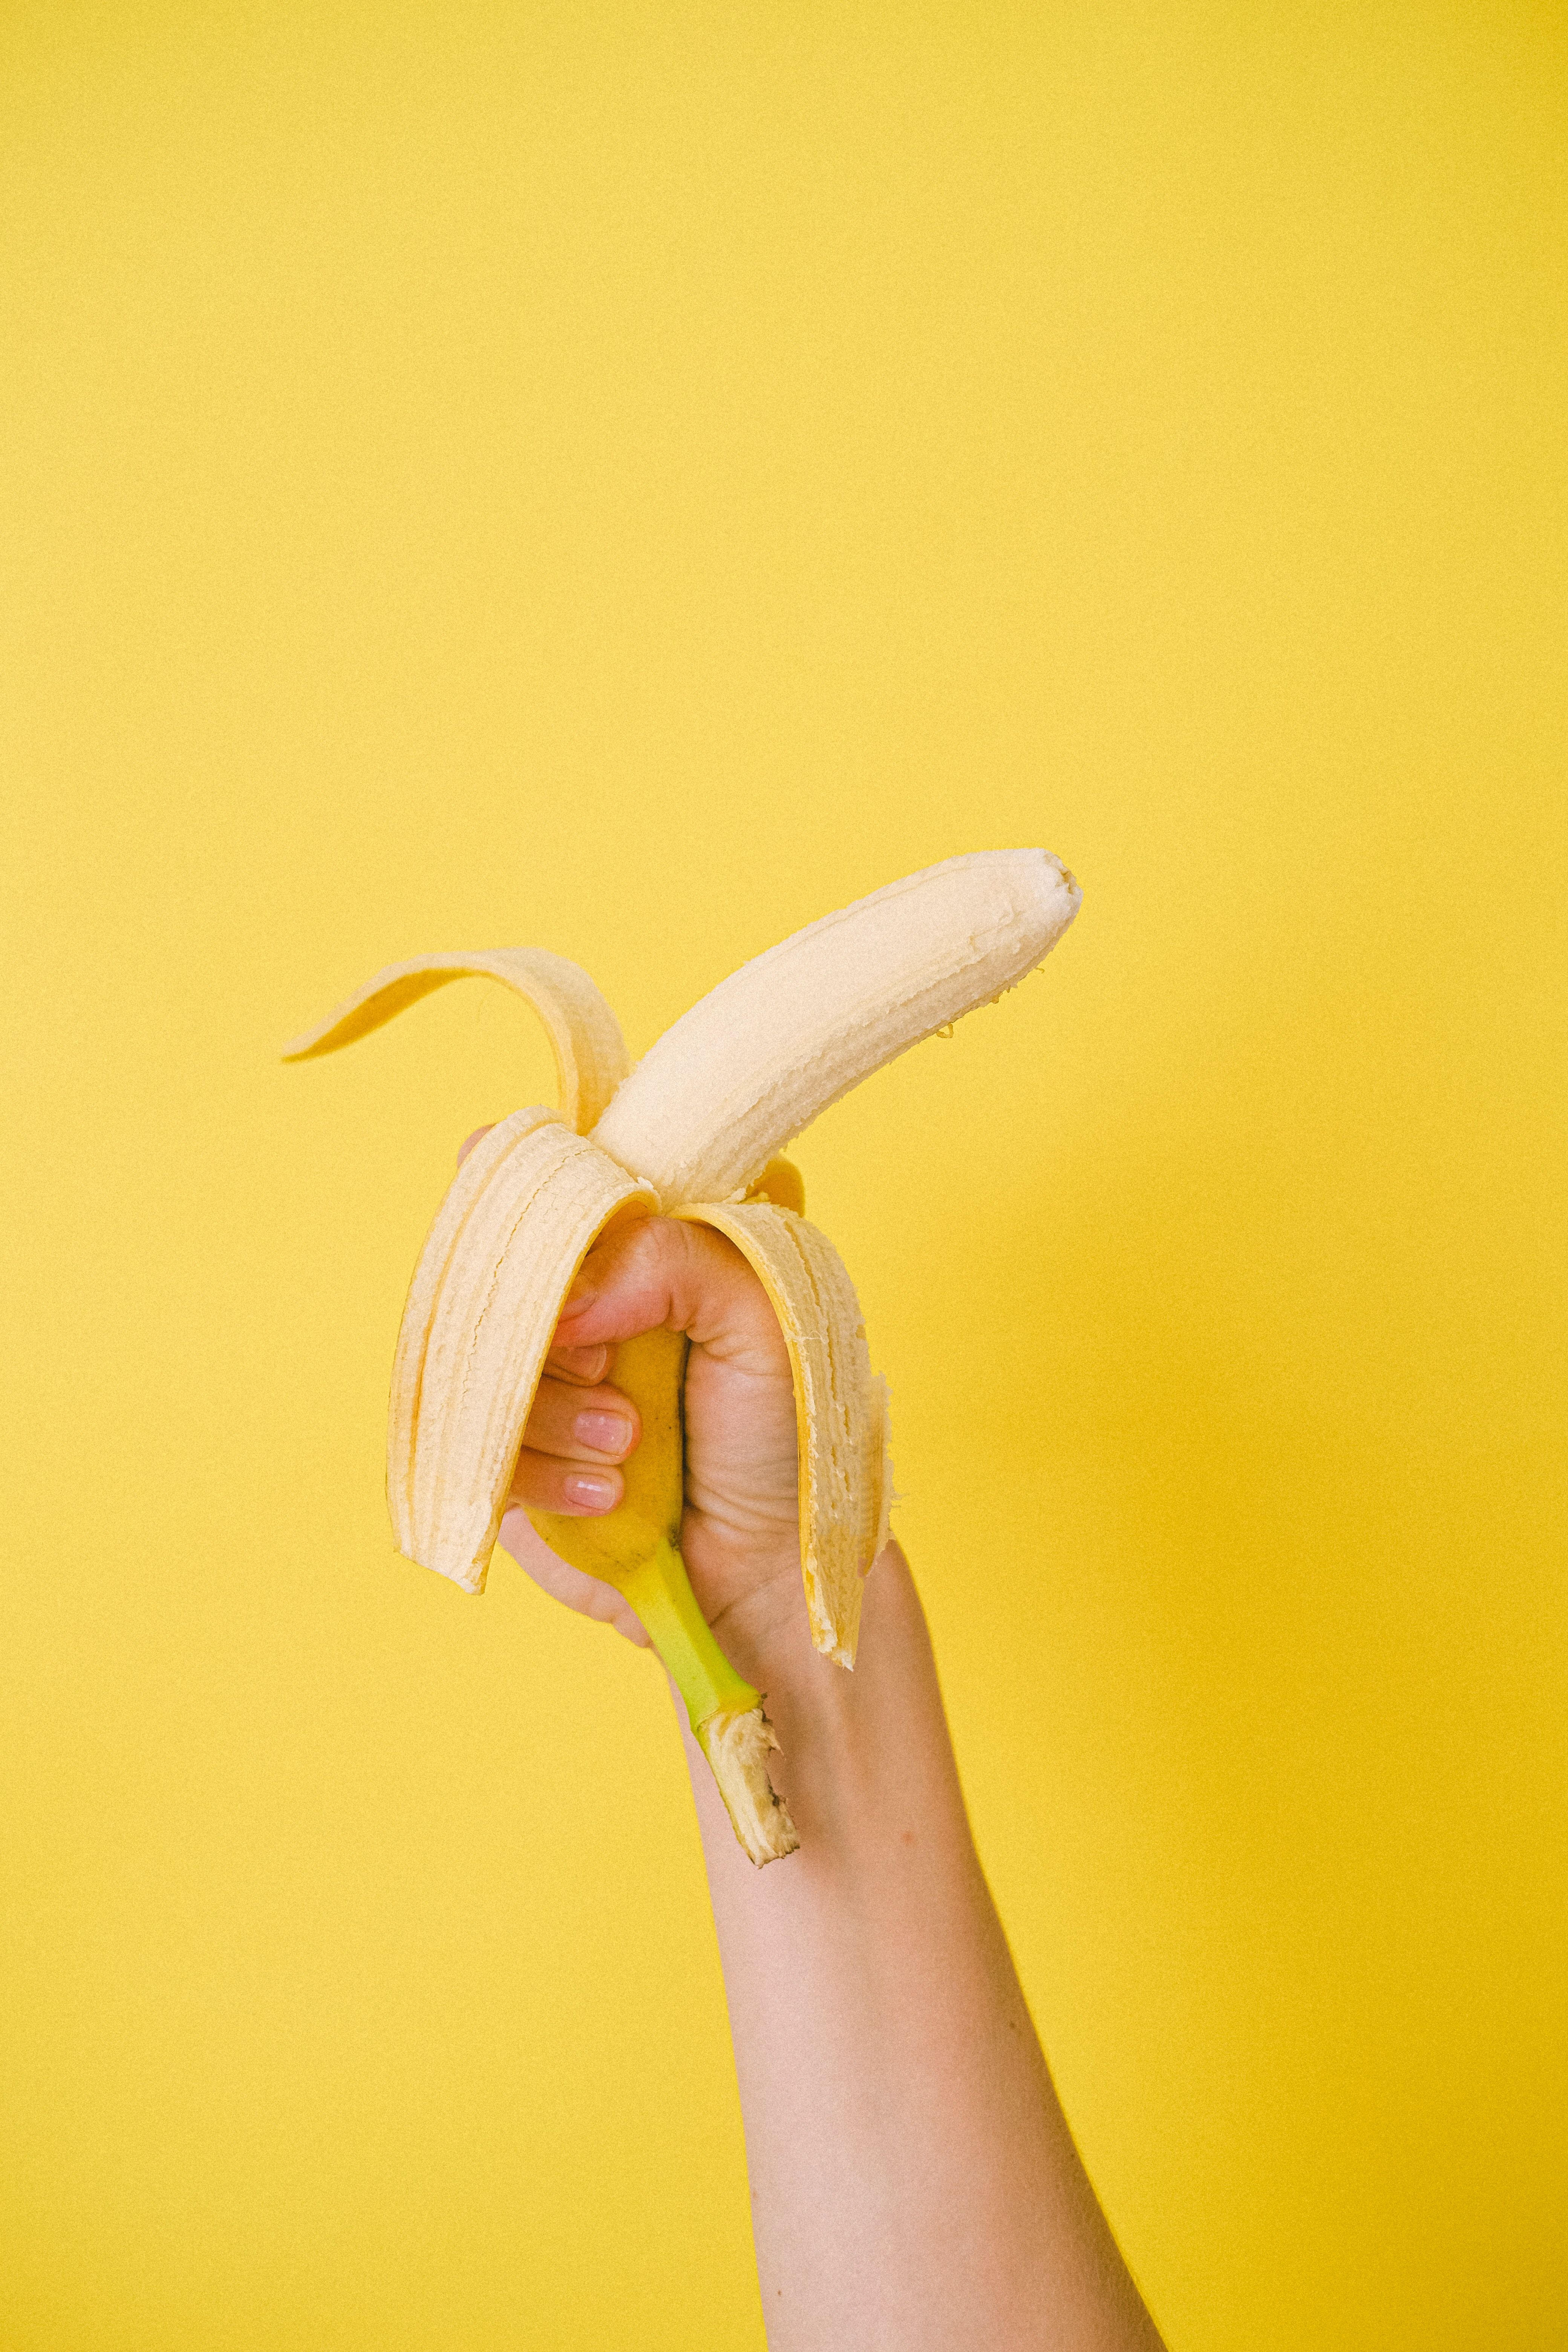 A hand holding up half of an unpeeled banana - Banana